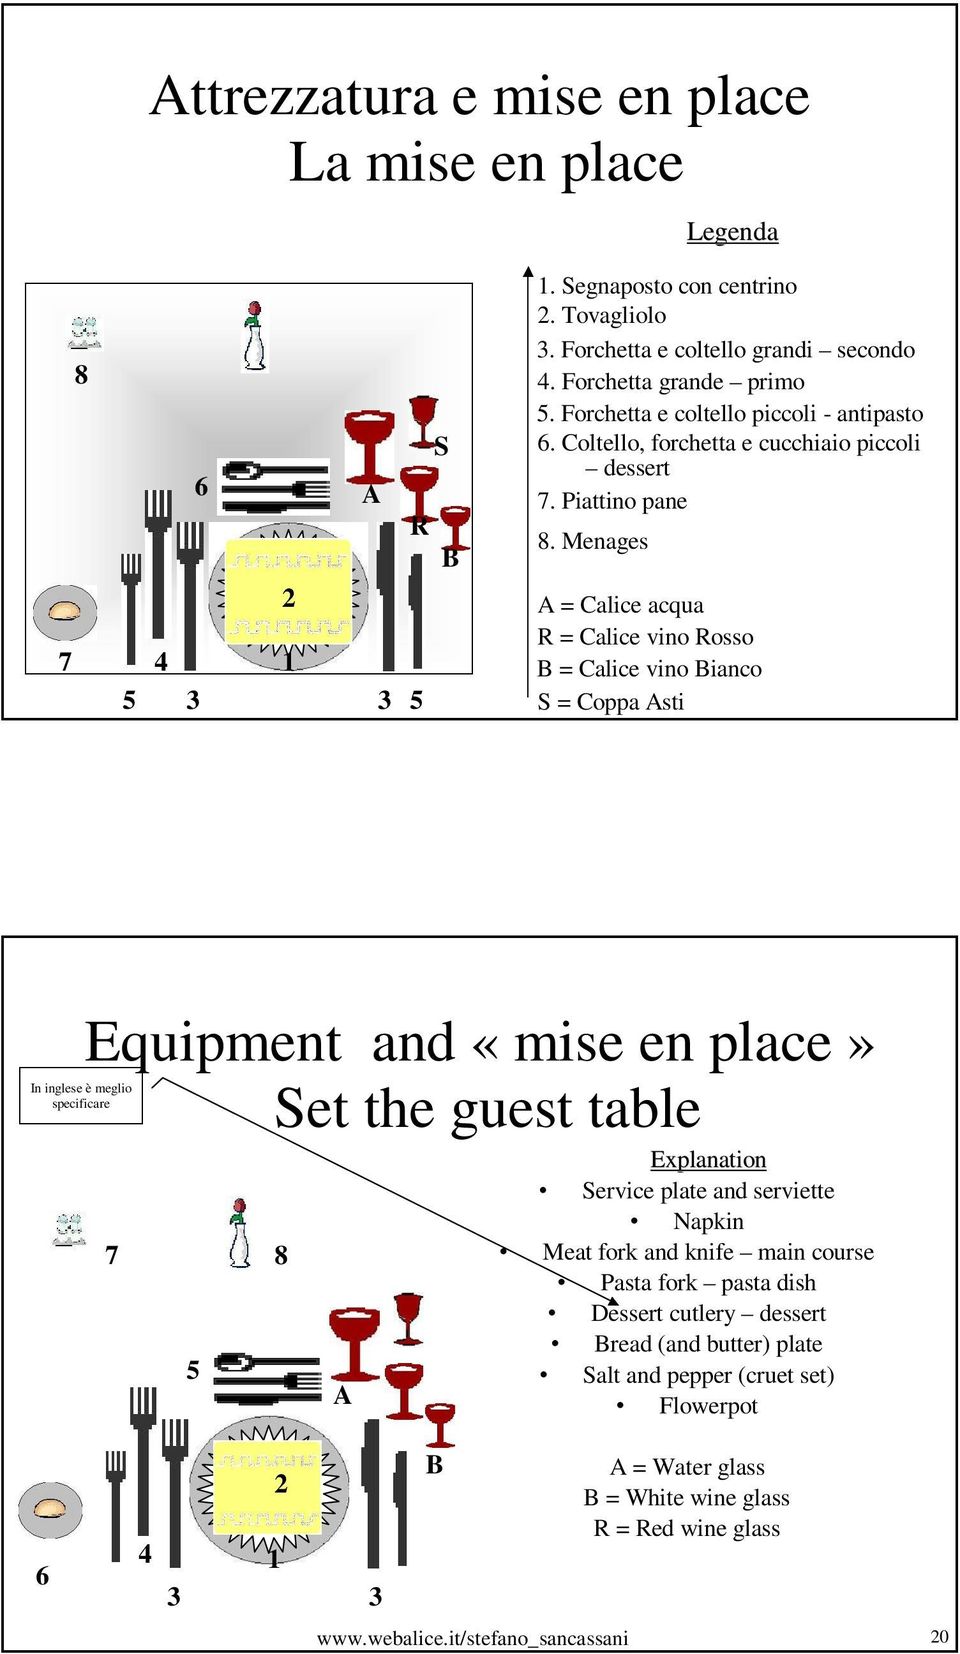 Menages A = Calice acqua R = Calice vino Rosso B = Calice vino Bianco S = Coppa Asti Equipment and «mise en place» Set the guest table In inglese è meglio specificare 7 8 5 R A Explanation